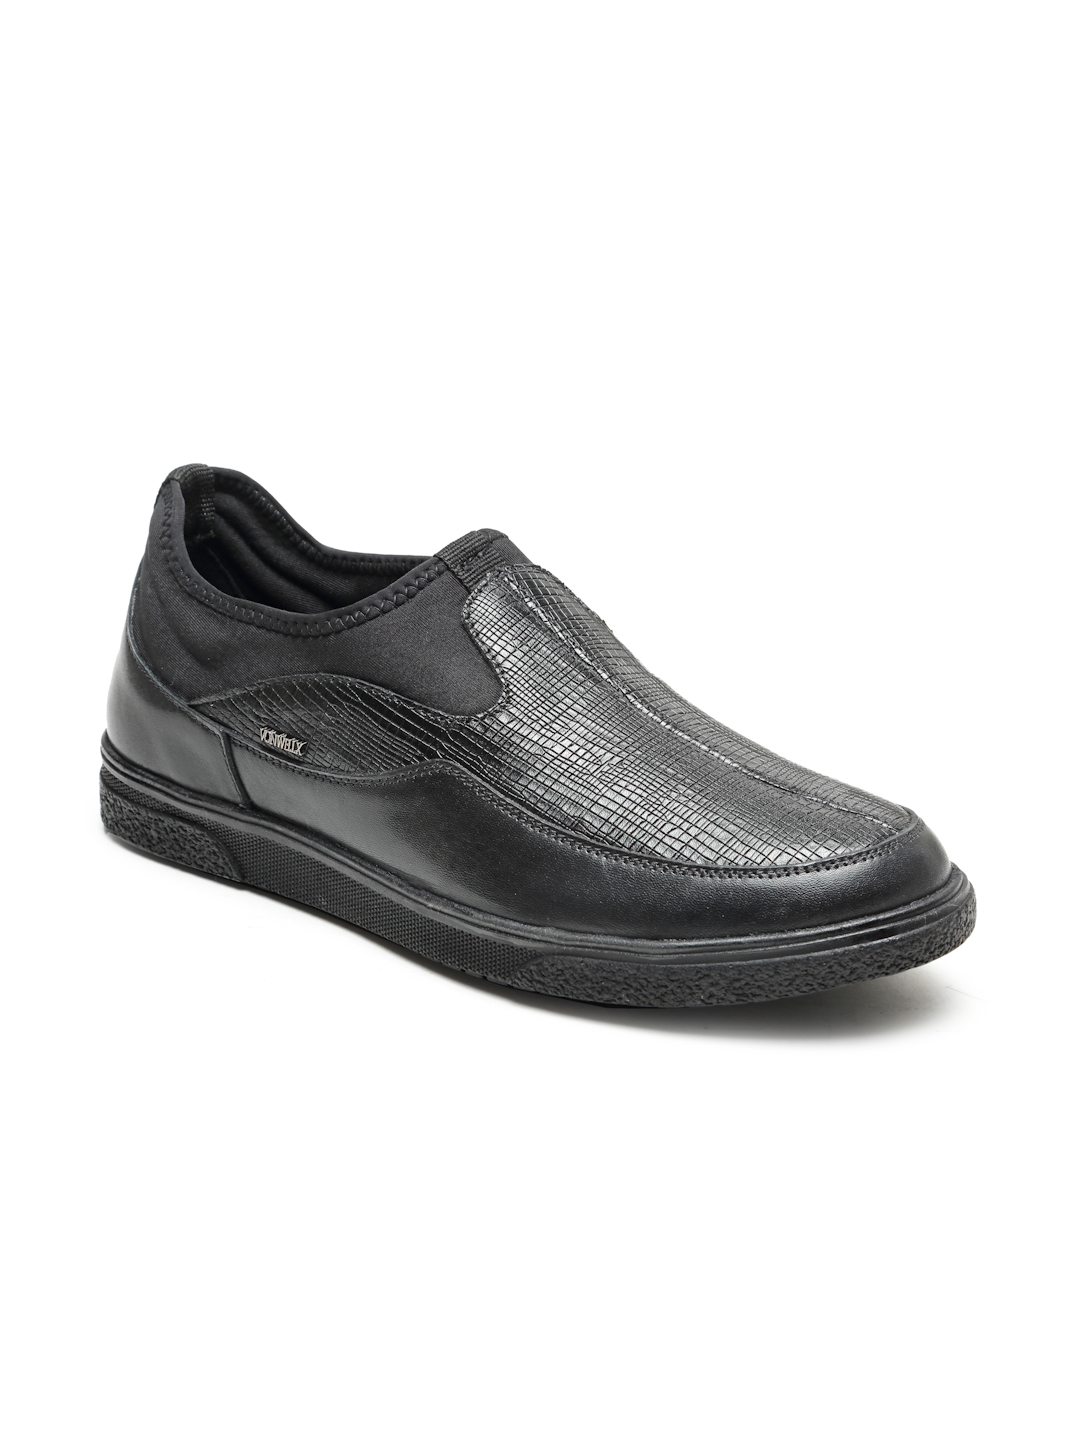 Buy Von Wellx Germany Comfort Men's Black Casual Loafers Everett Online in Karnataka